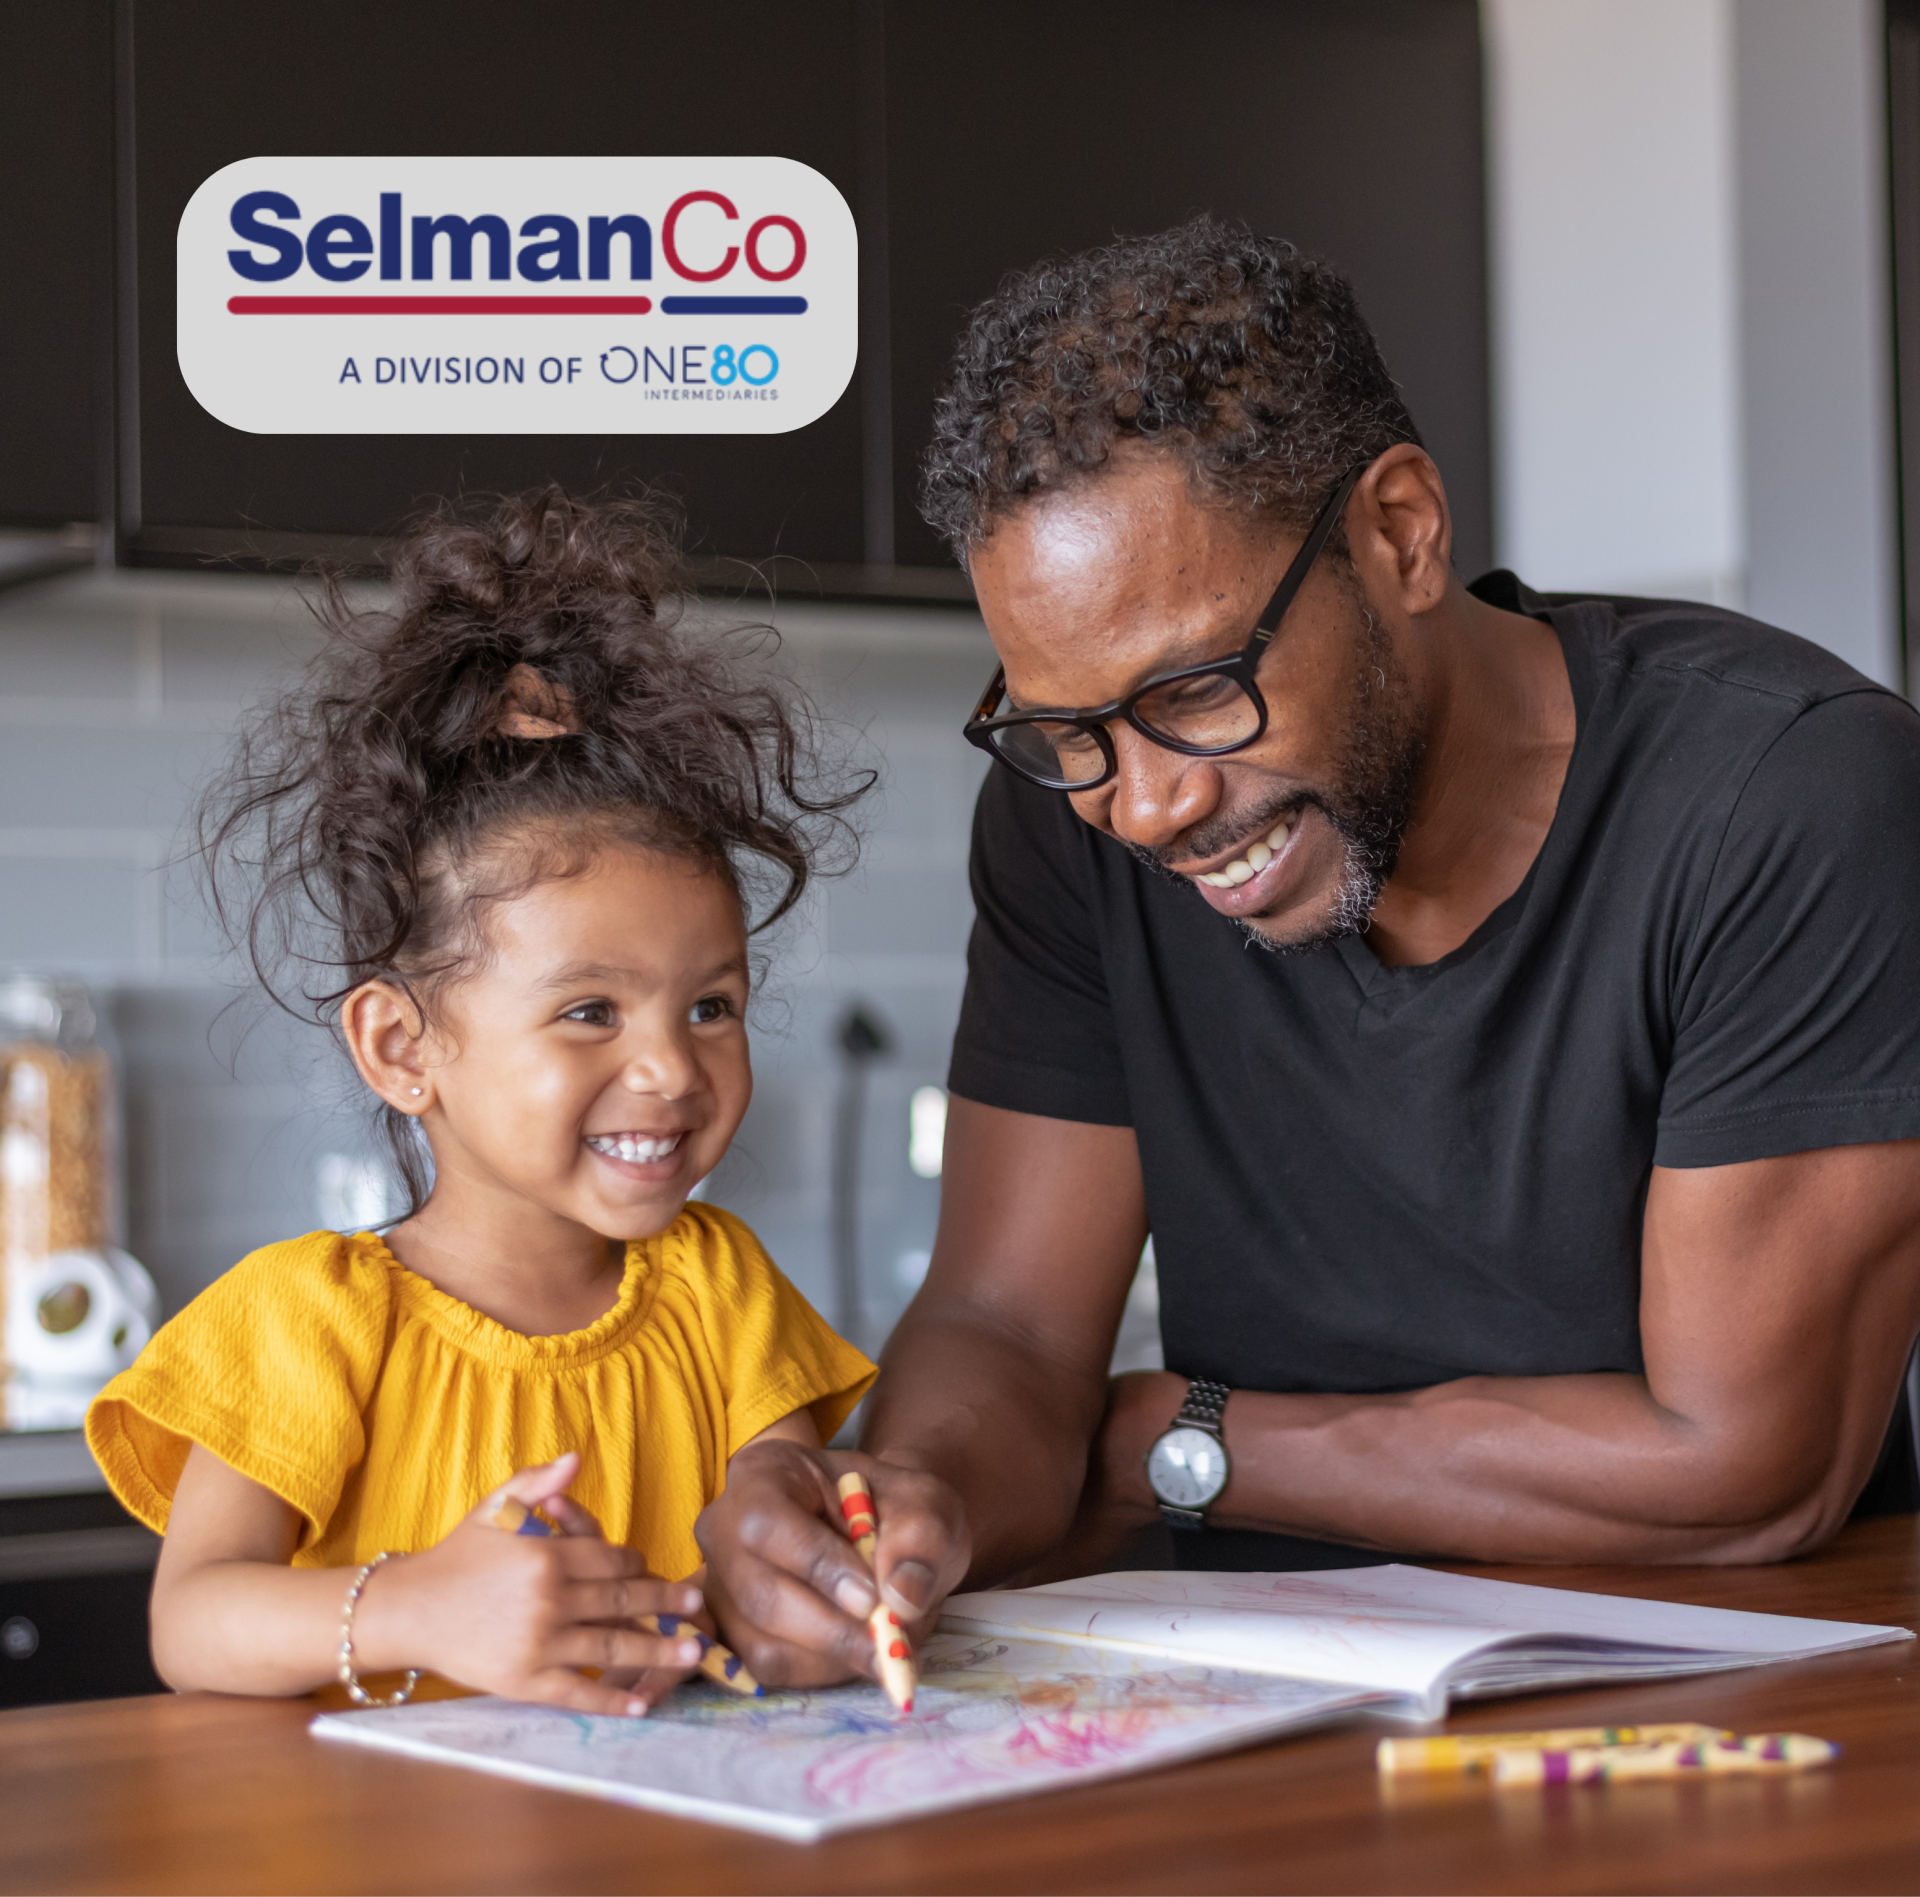 image with selmanco logo for cobranded dental partner site